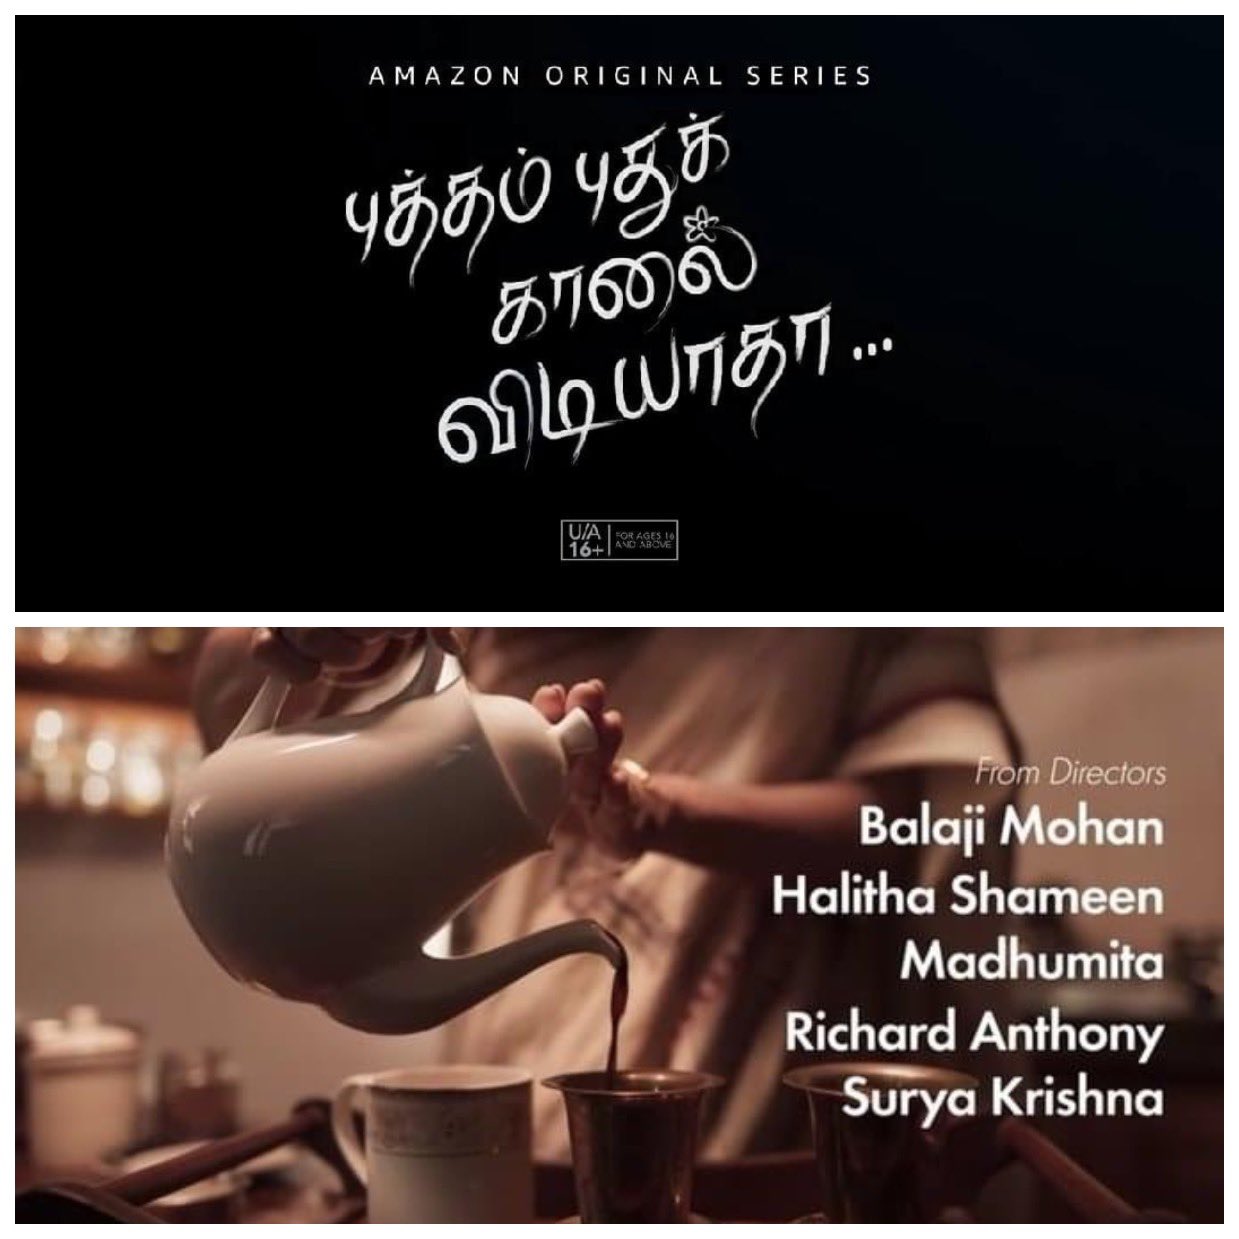 Putham Pudhu Kaalai Vidiyaadhaa Tamil Series Official Teaser